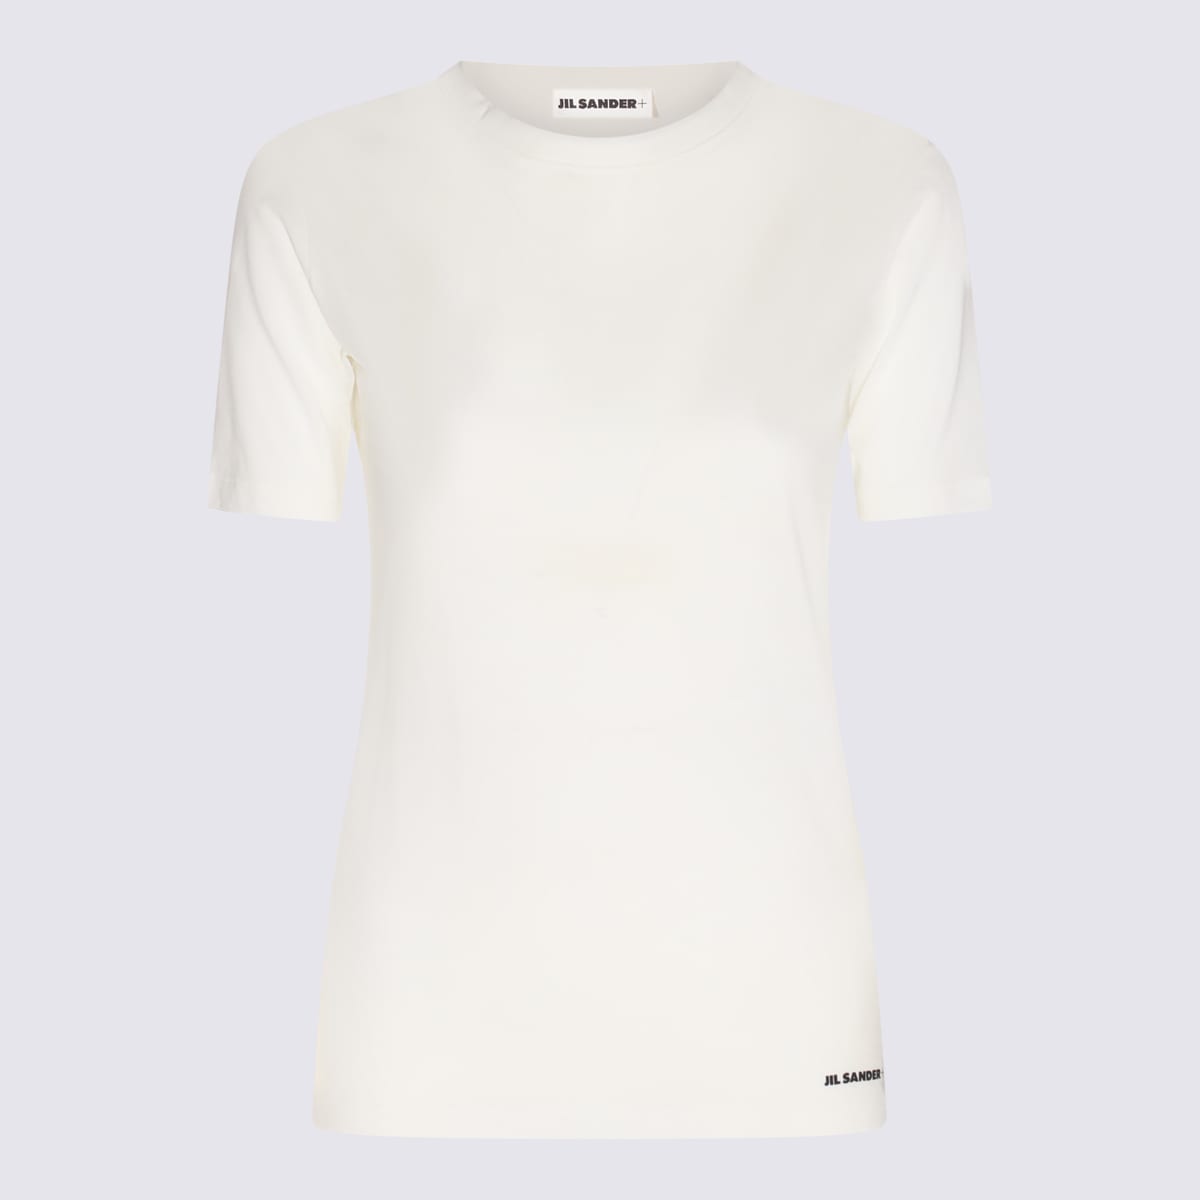 White Cotton T-shirt